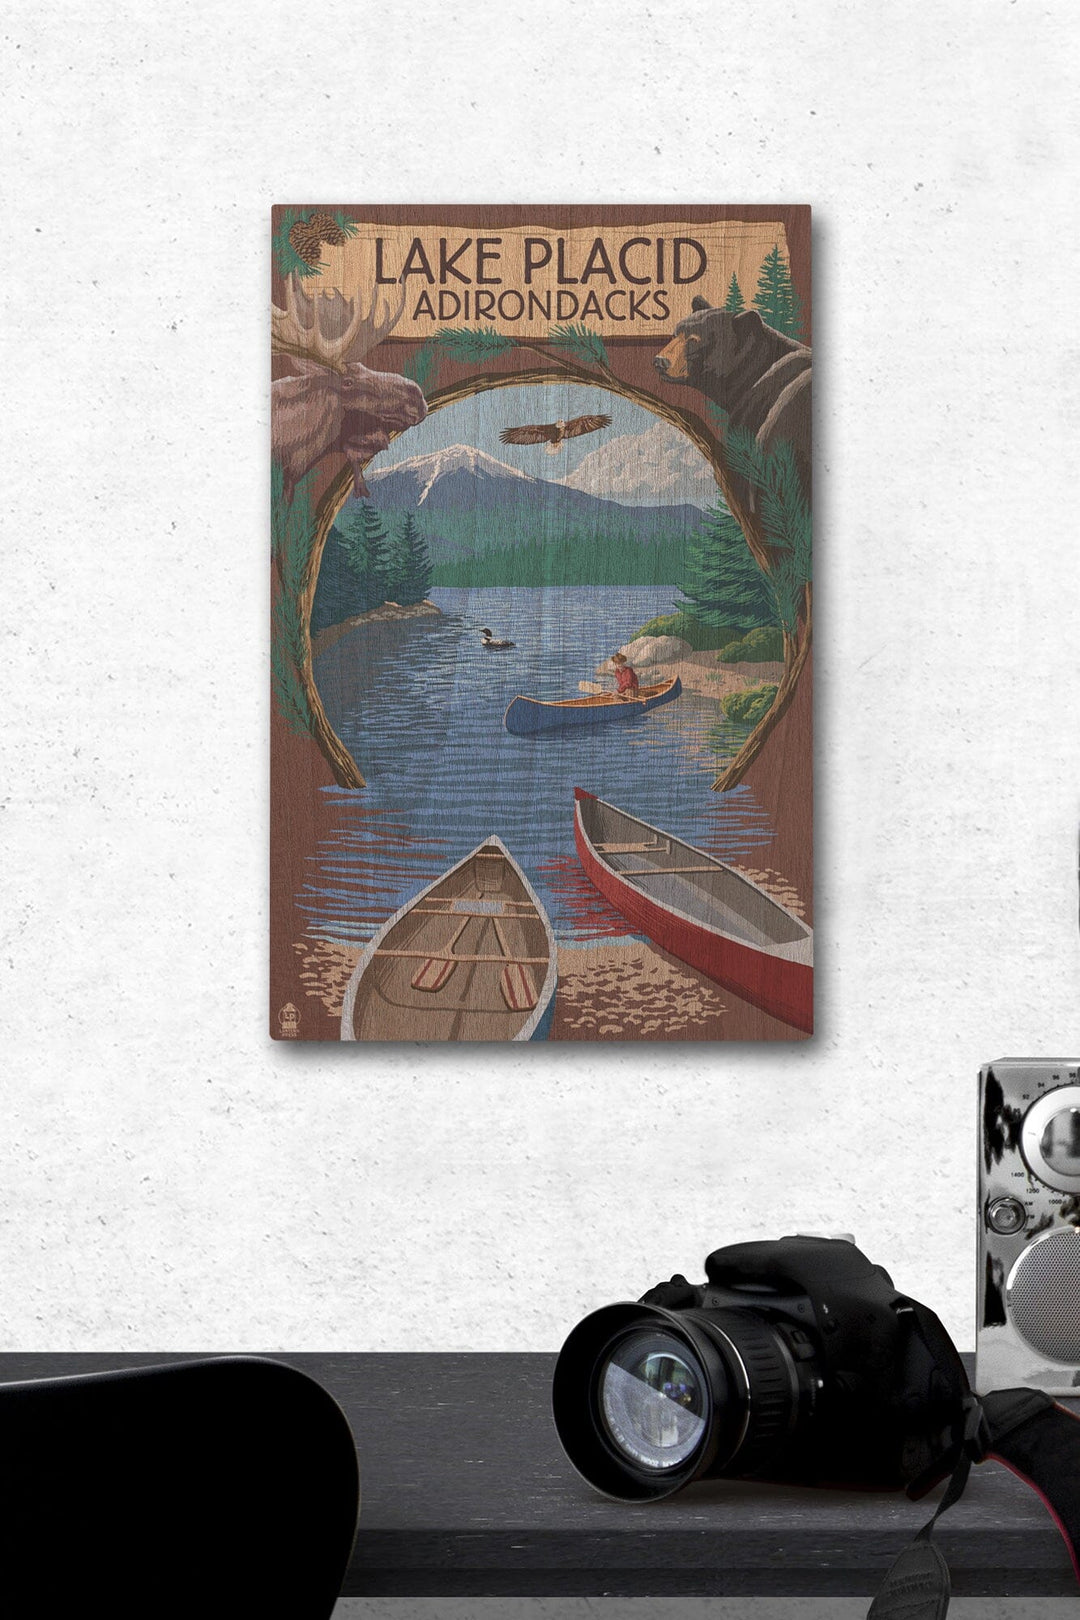 Lake Placid, New York, Adirondacks Canoe Scene, Lantern Press Artwork, Wood Signs and Postcards Wood Lantern Press 12 x 18 Wood Gallery Print 